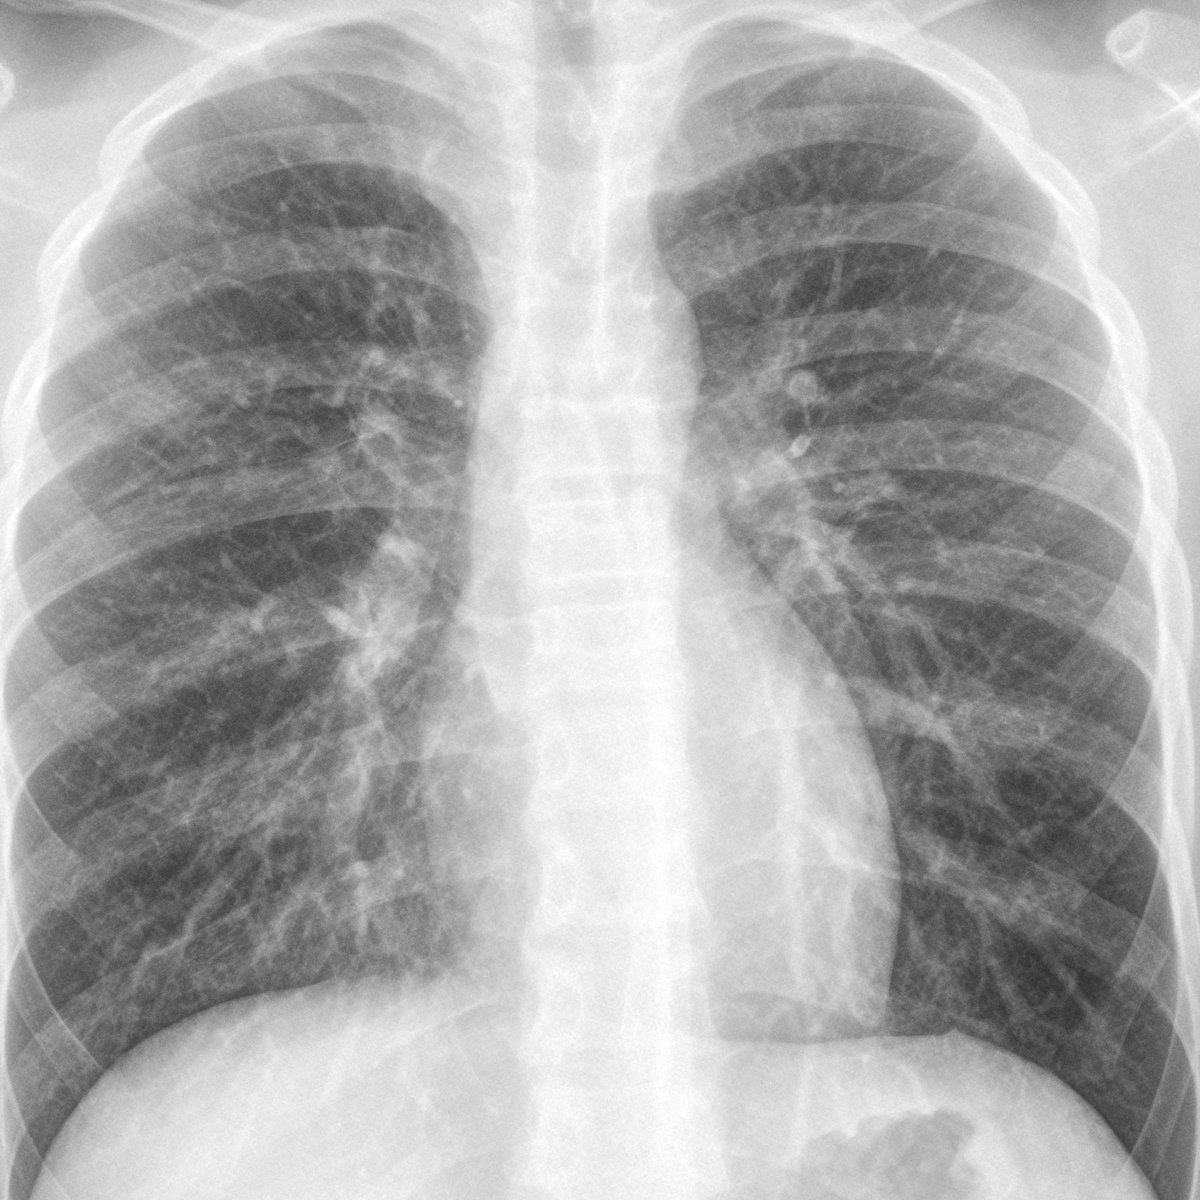 bronchopneumonia x ray findings